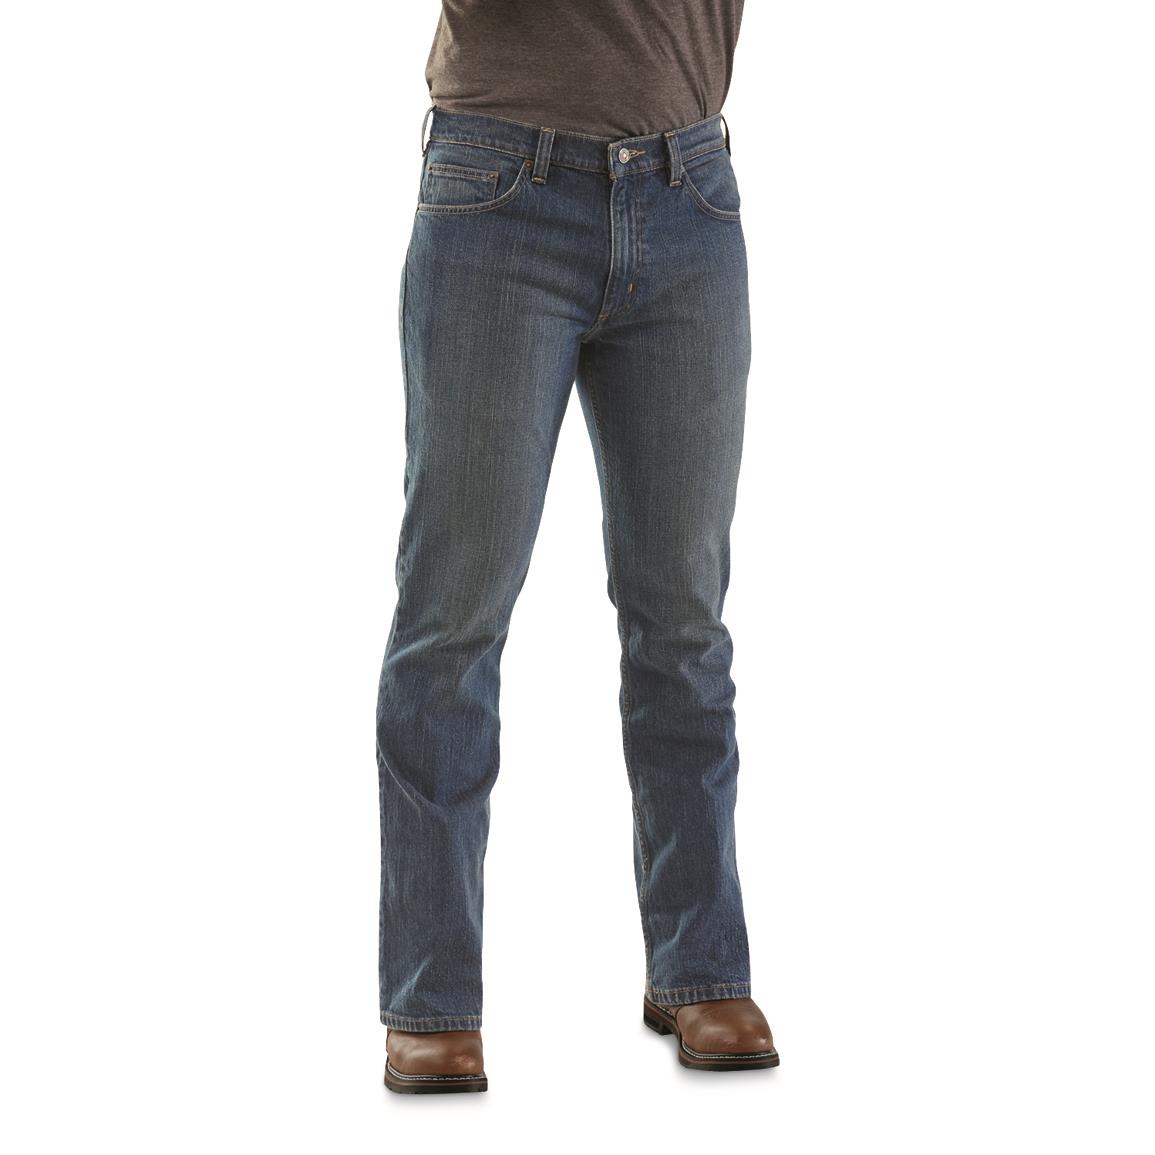 Guide Gear Men's Sportsman's Bootcut Jeans, Quarry